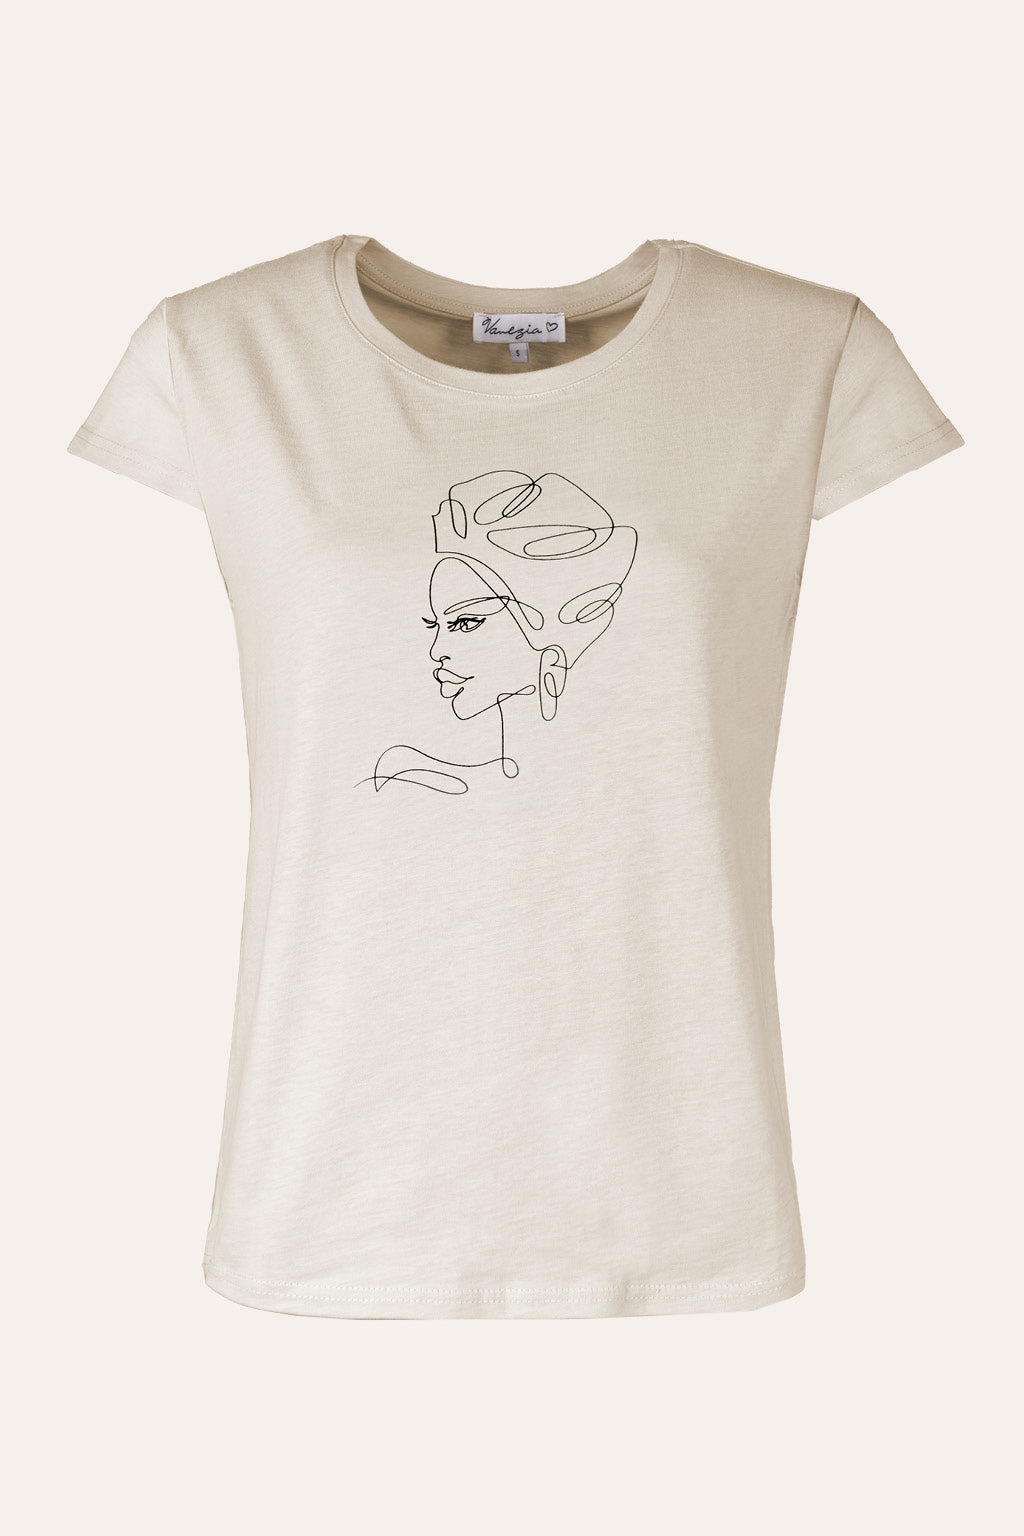 T-Shirt Lineart Woman (Beige)